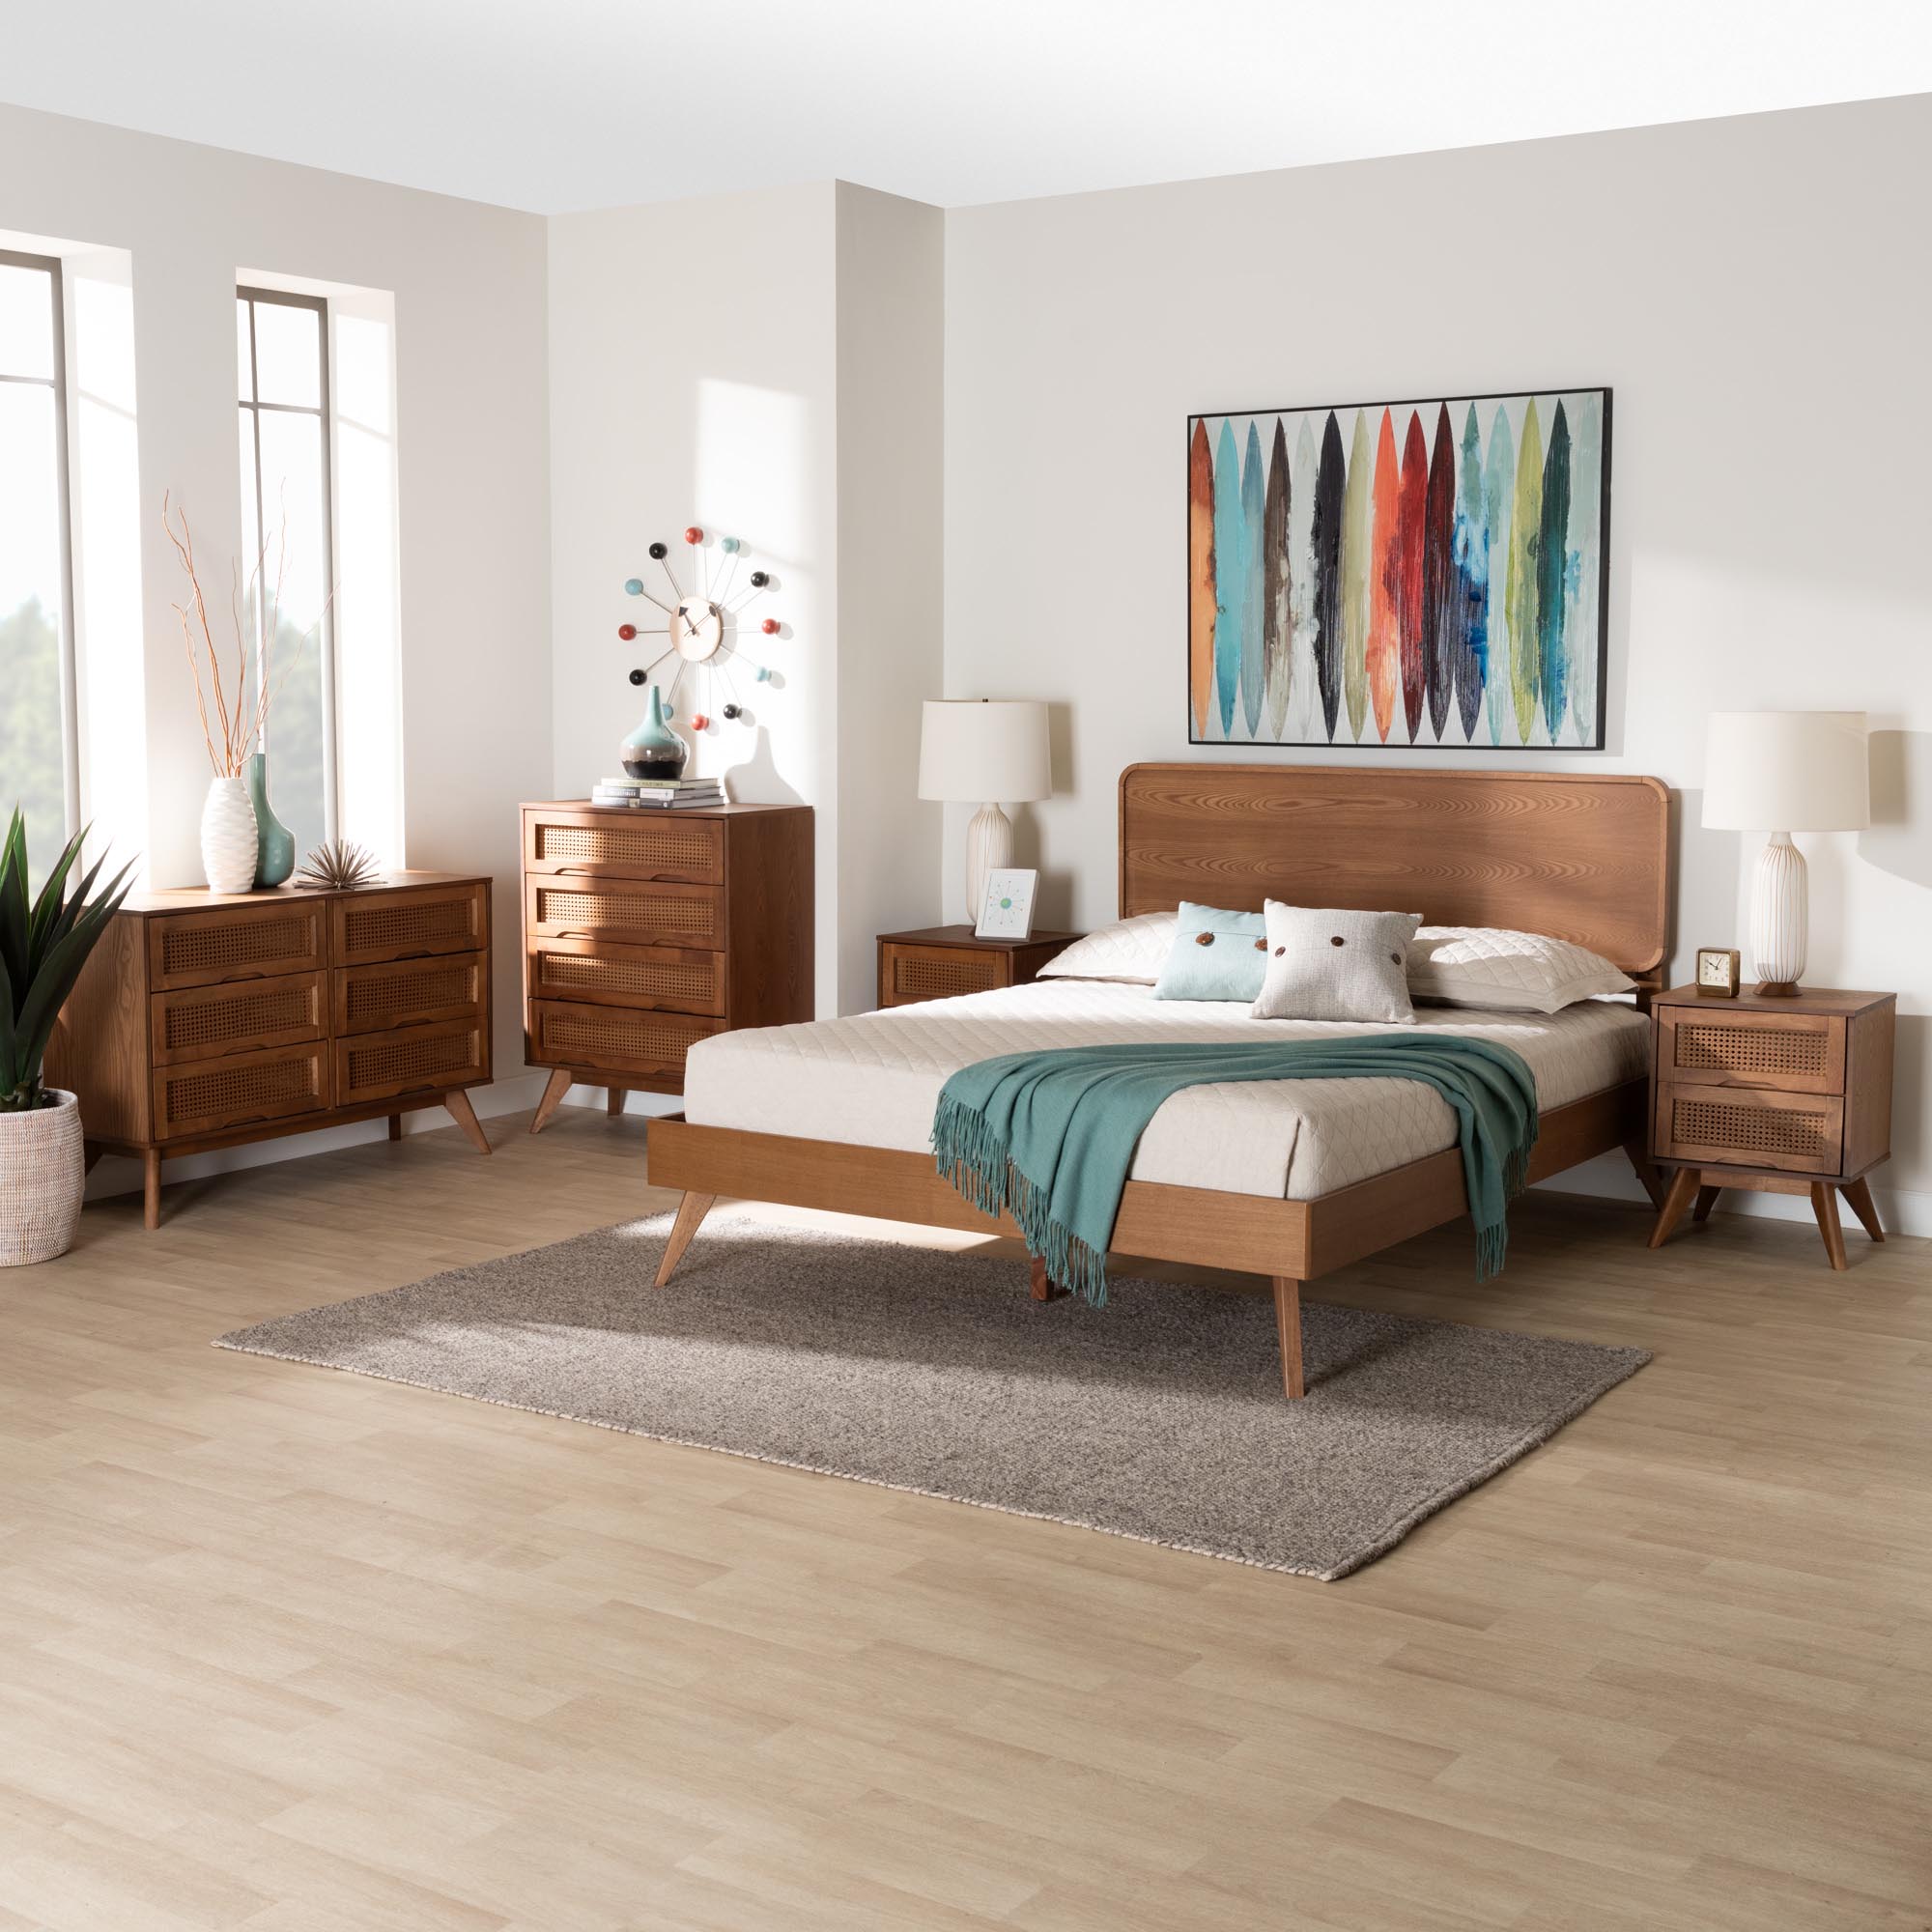 Baxton Studio 193271433872 63.80 x 82.50 x 14.90 in. Demeter Mid-Century Modern Wood Queen Size Bedroom Set&#44; Walnut Brown - 5 Piece